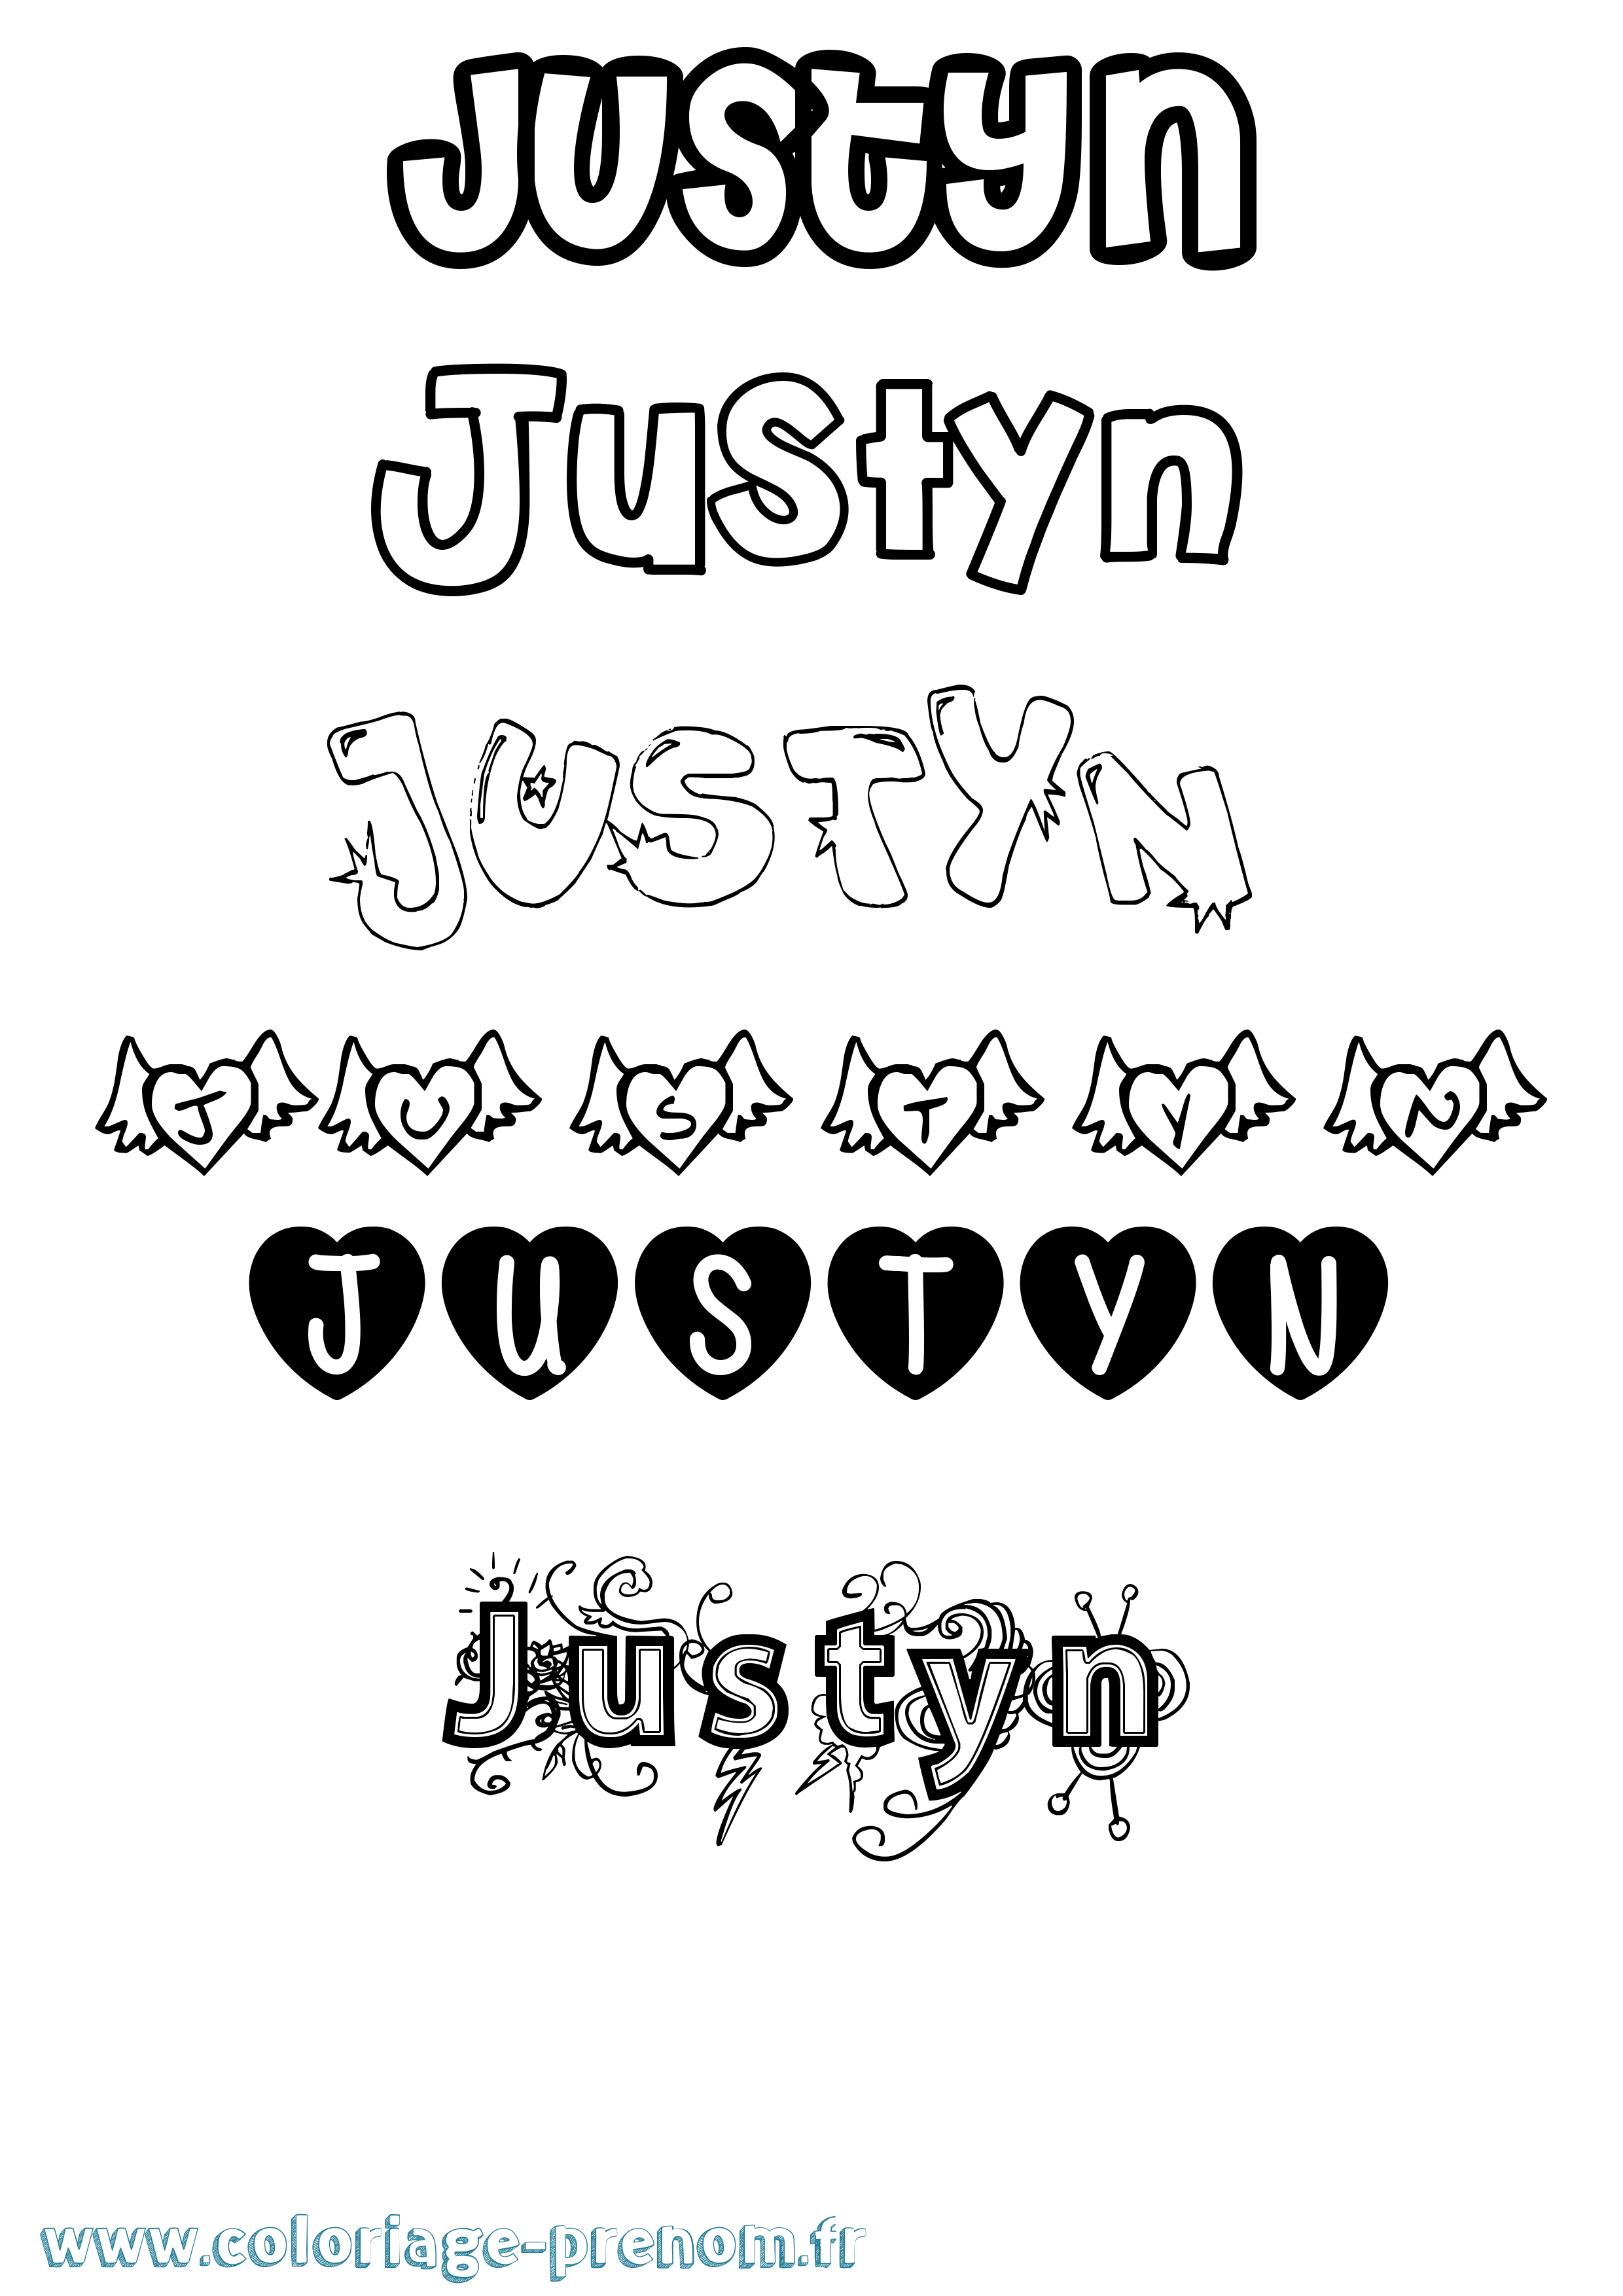 Coloriage prénom Justyn Girly